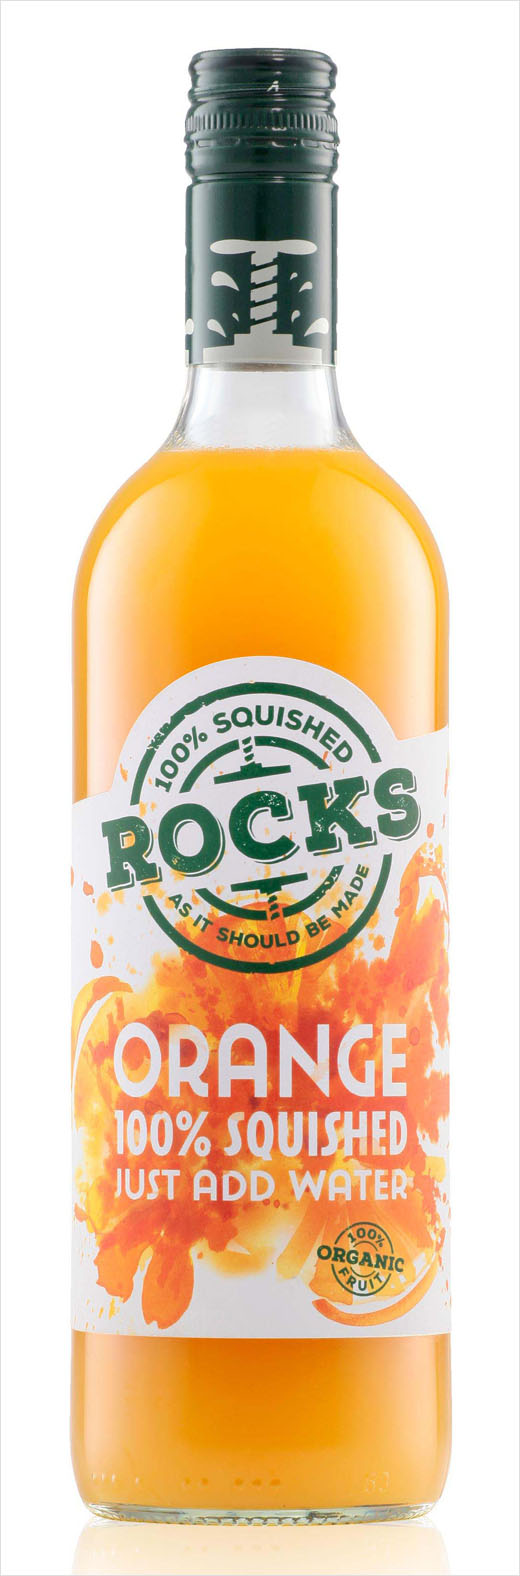 Bluemarlin-logo-packaging-design-Rocks-squash-drink-3